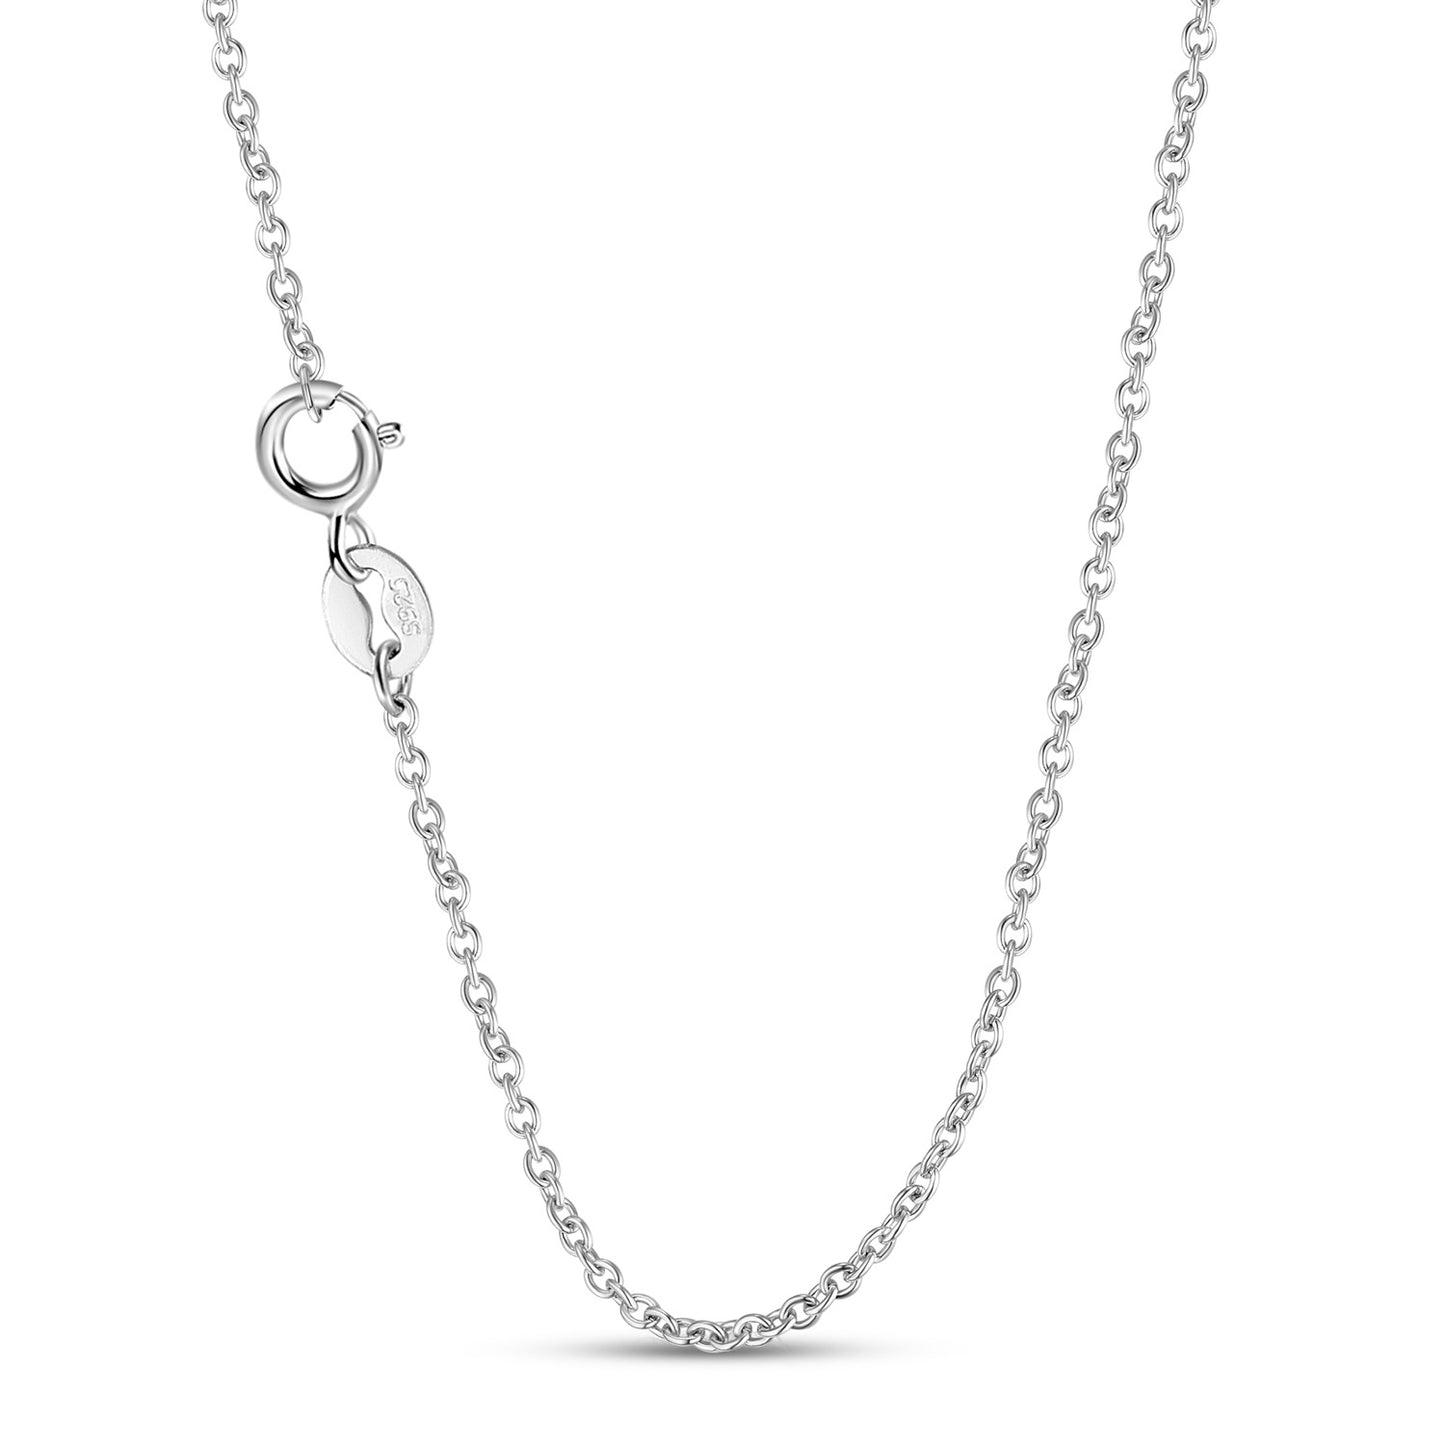 Fairylocus "Four-Leaf Clover" Austrian Crystal Pearl Sterling Silver Necklace FLZZNL20 Fairylocus